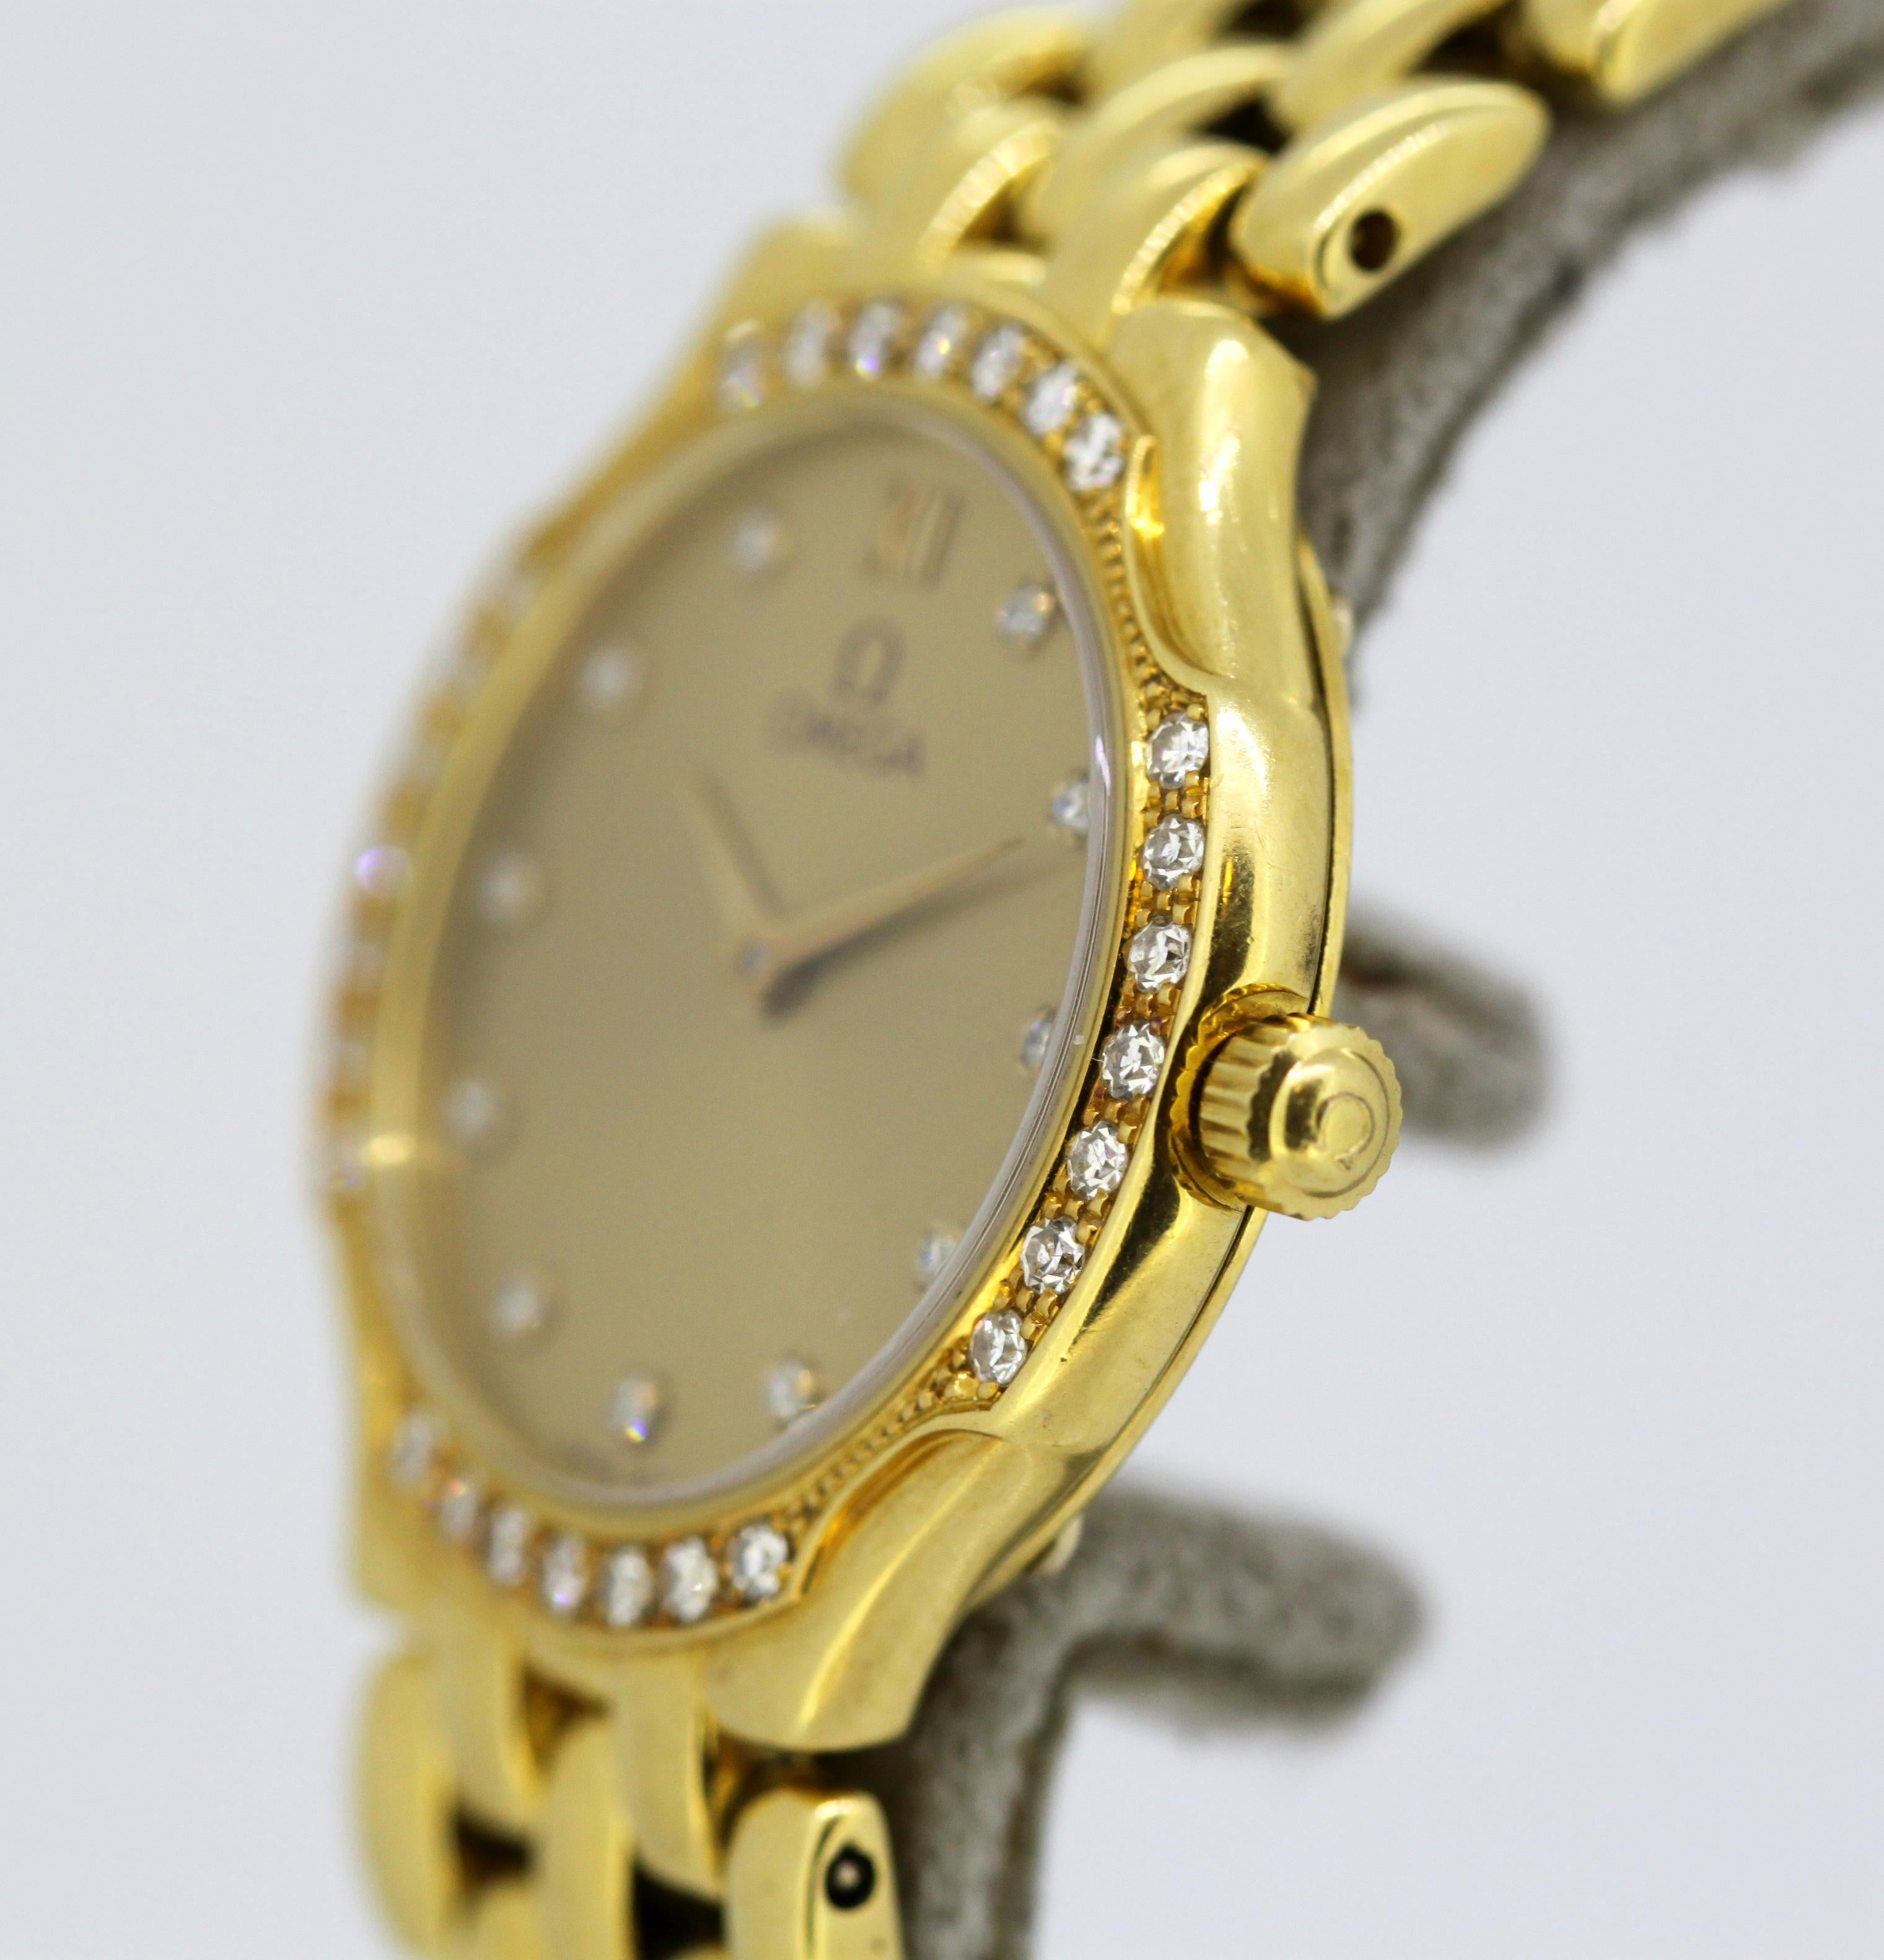 Ladies Omega wristwatch set in full 18k gold, diamond bezel & hour markers 5